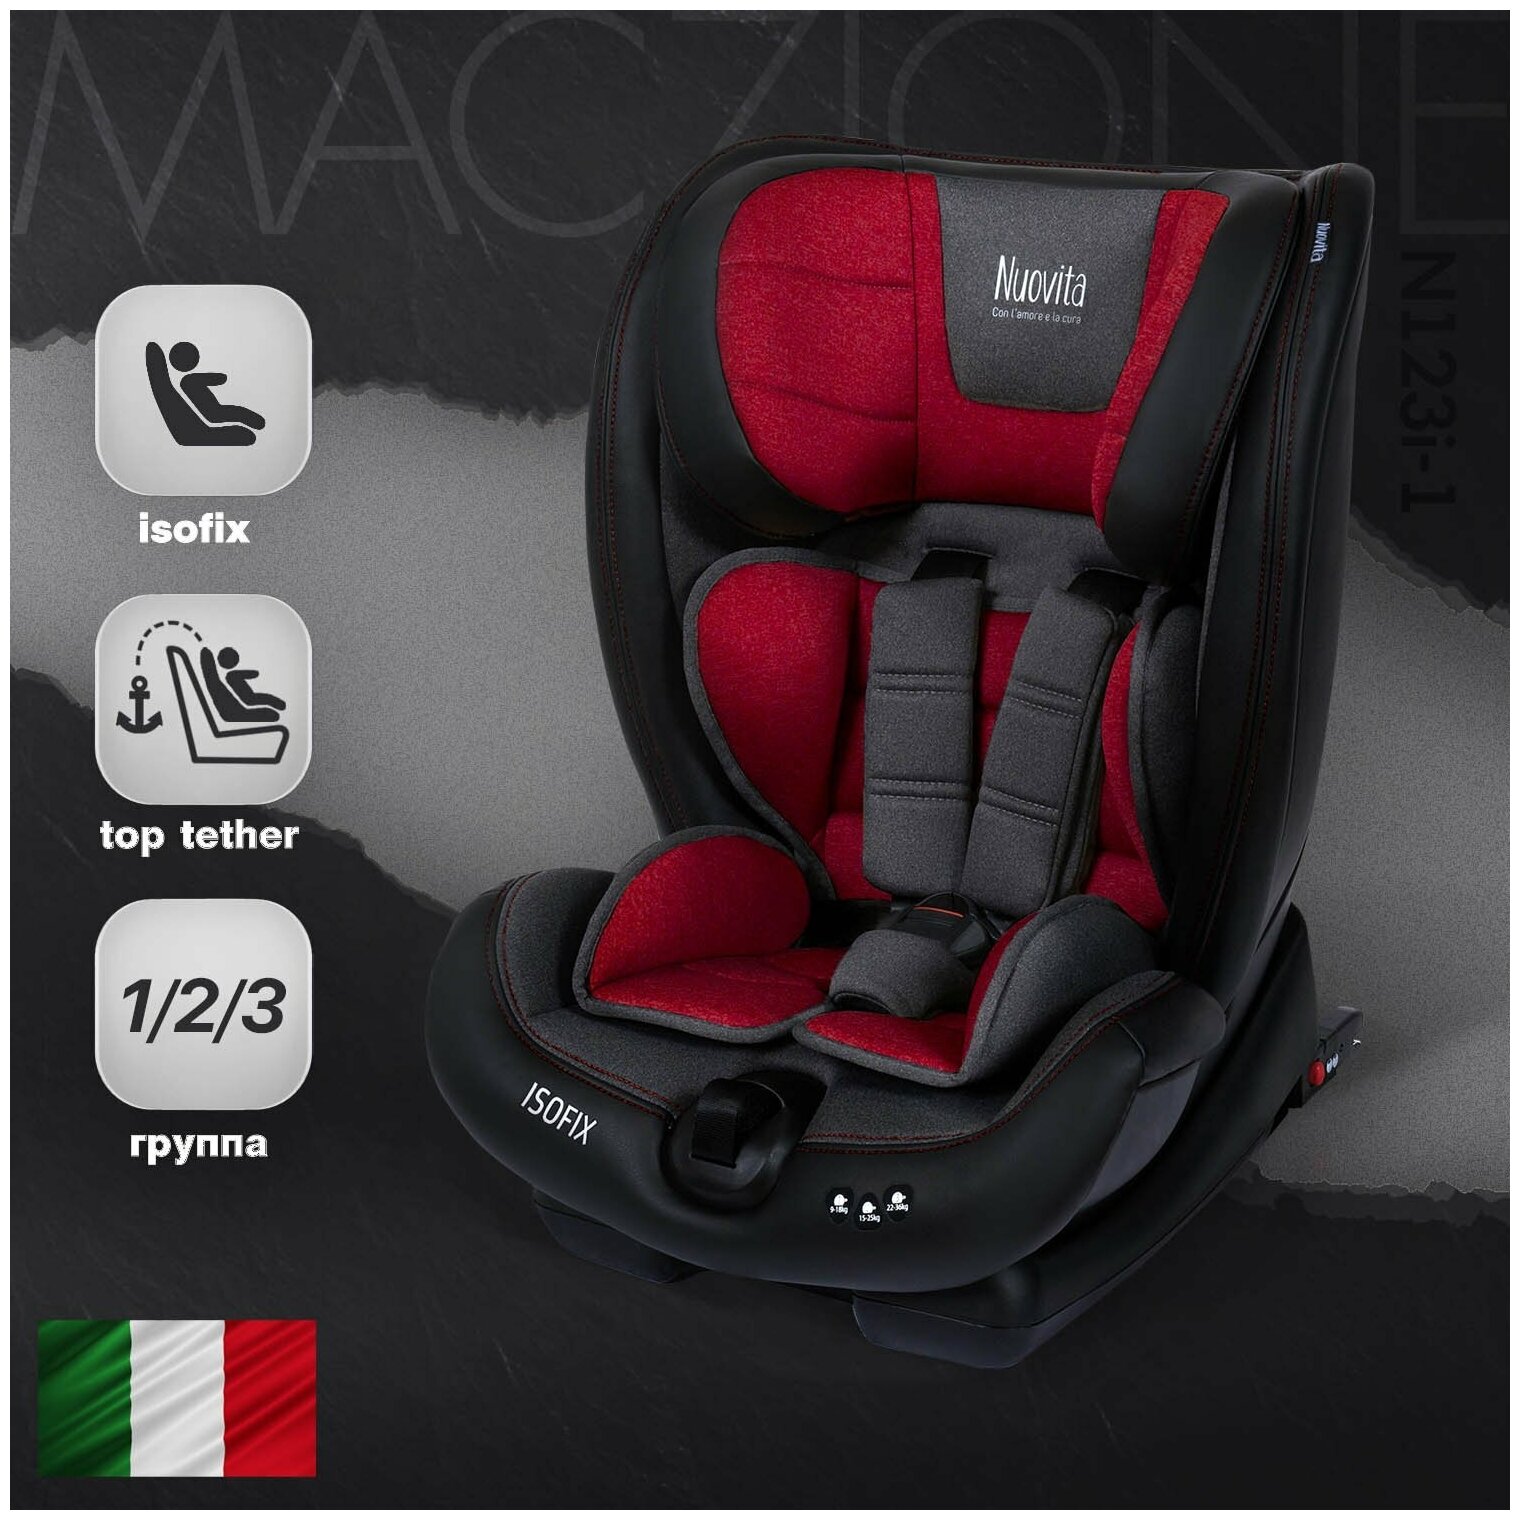 Автокресло Nuovita Maczione N123i-1 (Vinoso/Бордовый)Группа: 1/2/3 – от 9 месяцев до 12 лет (вес 9-36 кг)